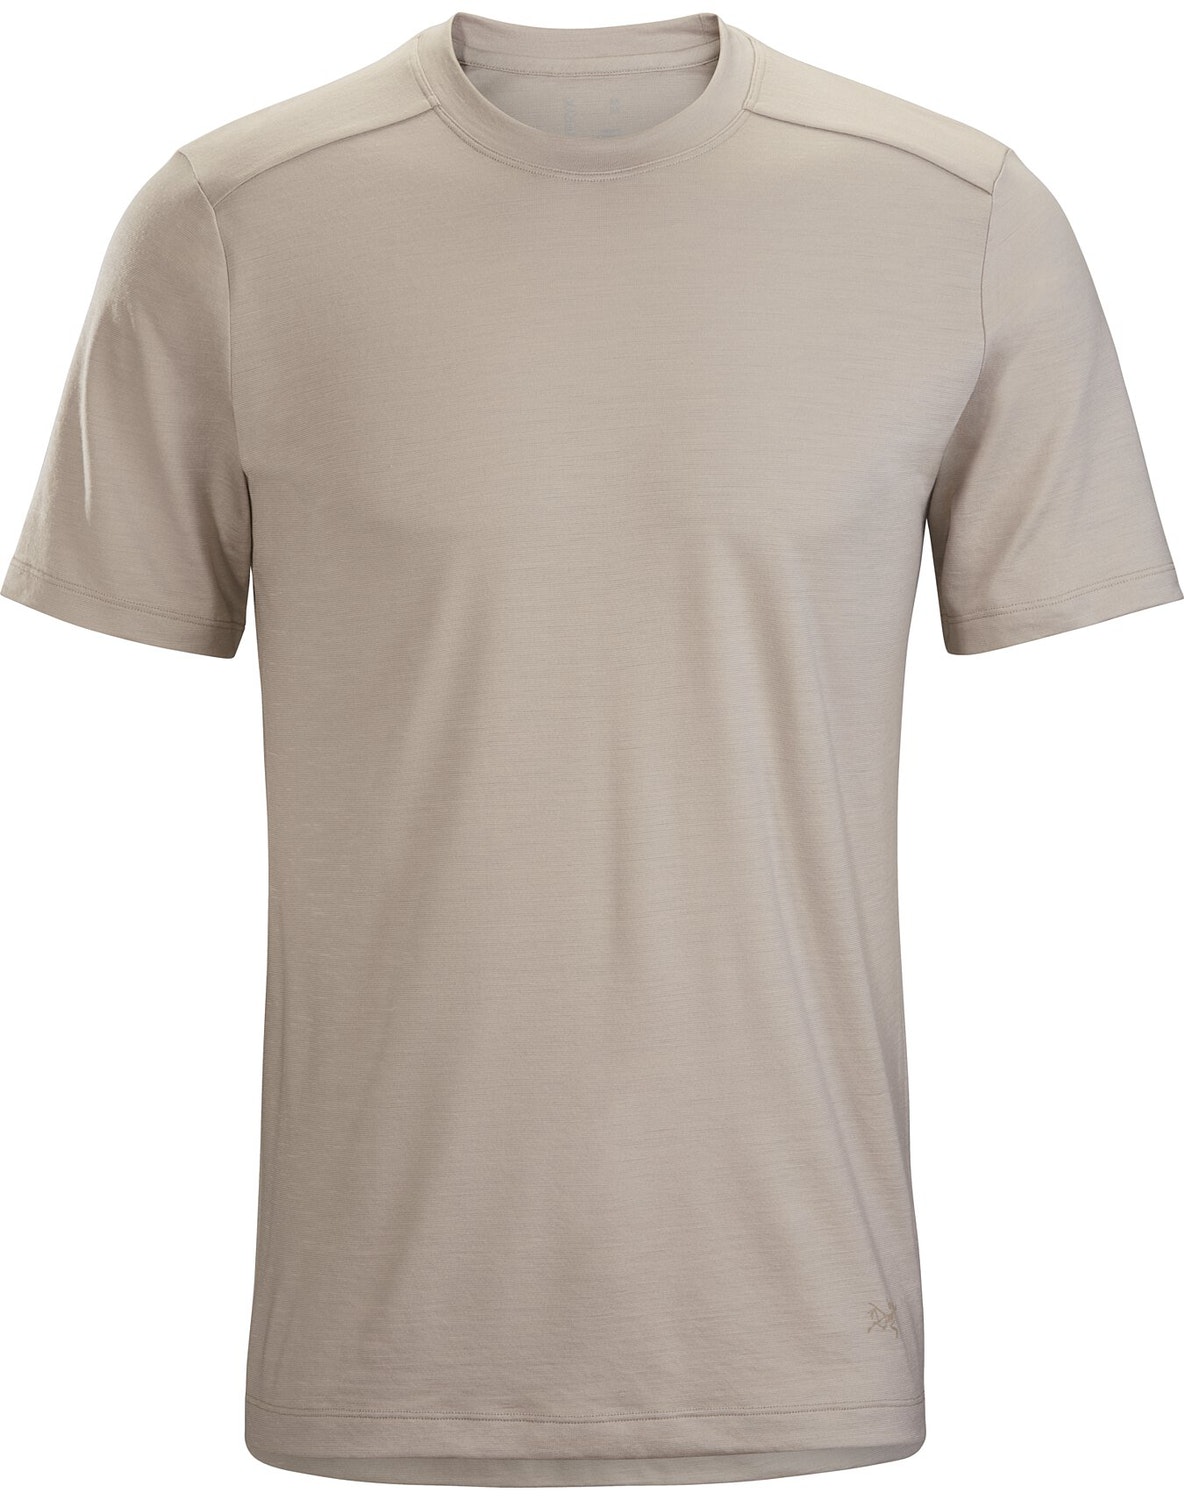 T-shirt Arc'teryx A2B Uomo Beige - IT-5335